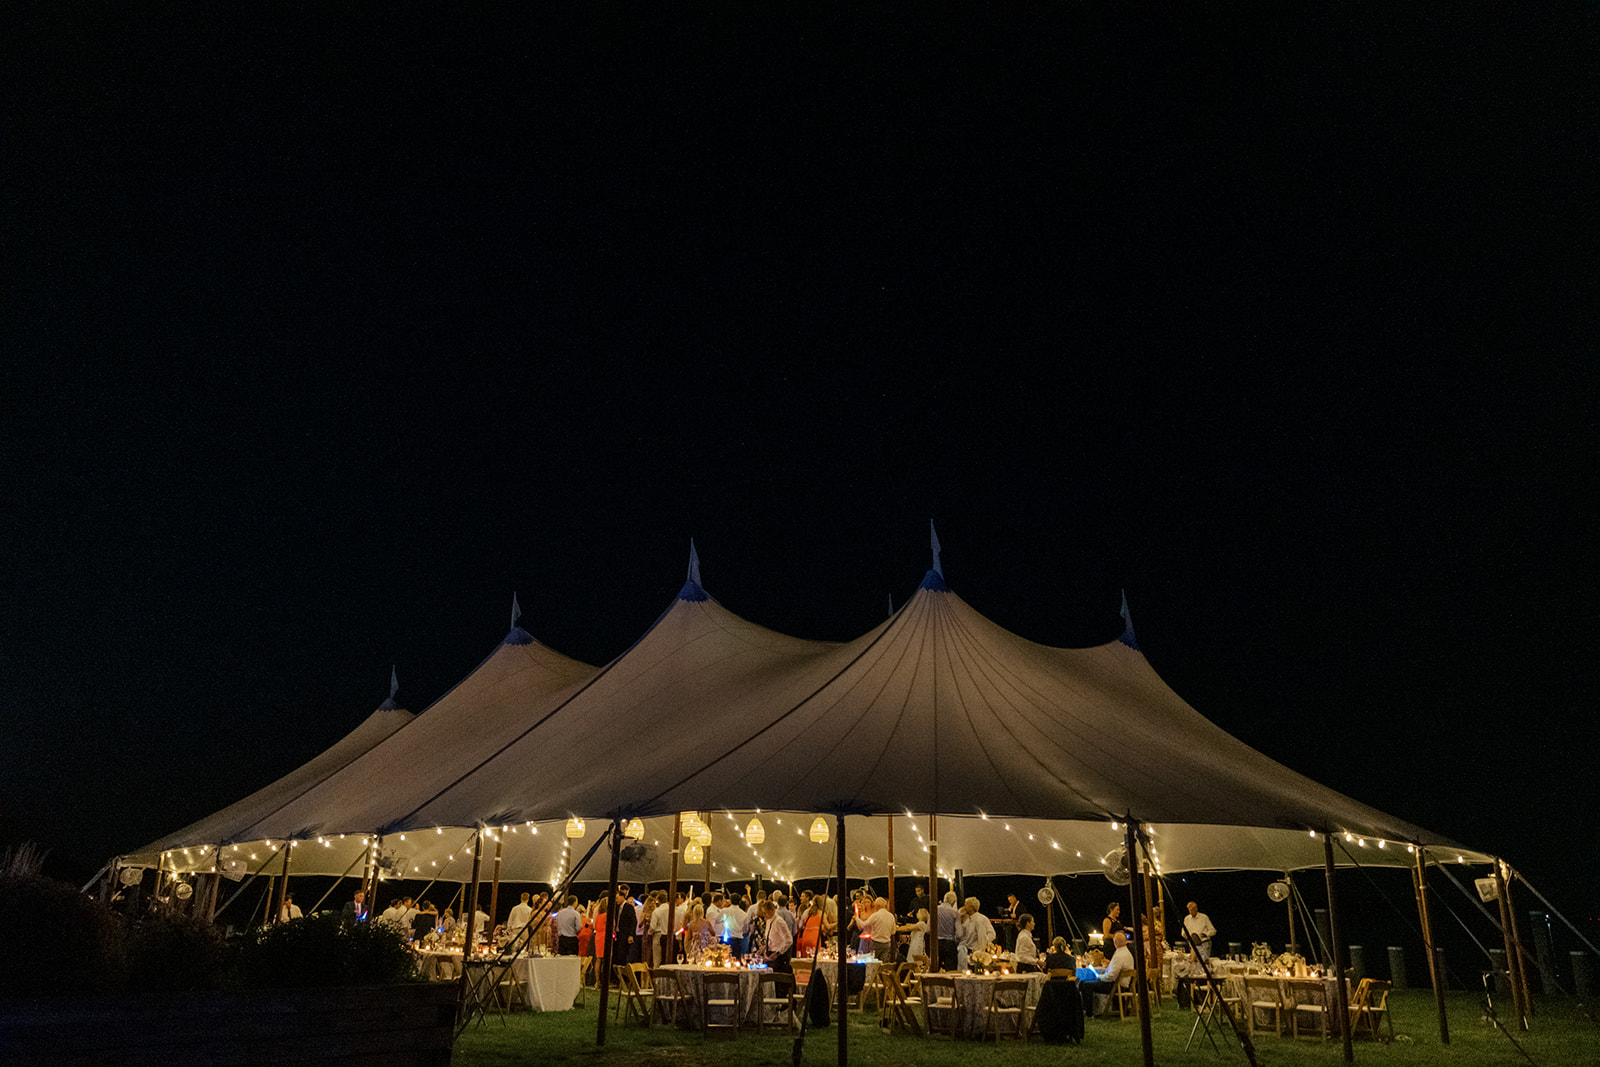 chesapeake bay maritime museum wedding reception tent at night in saint michaels maryland